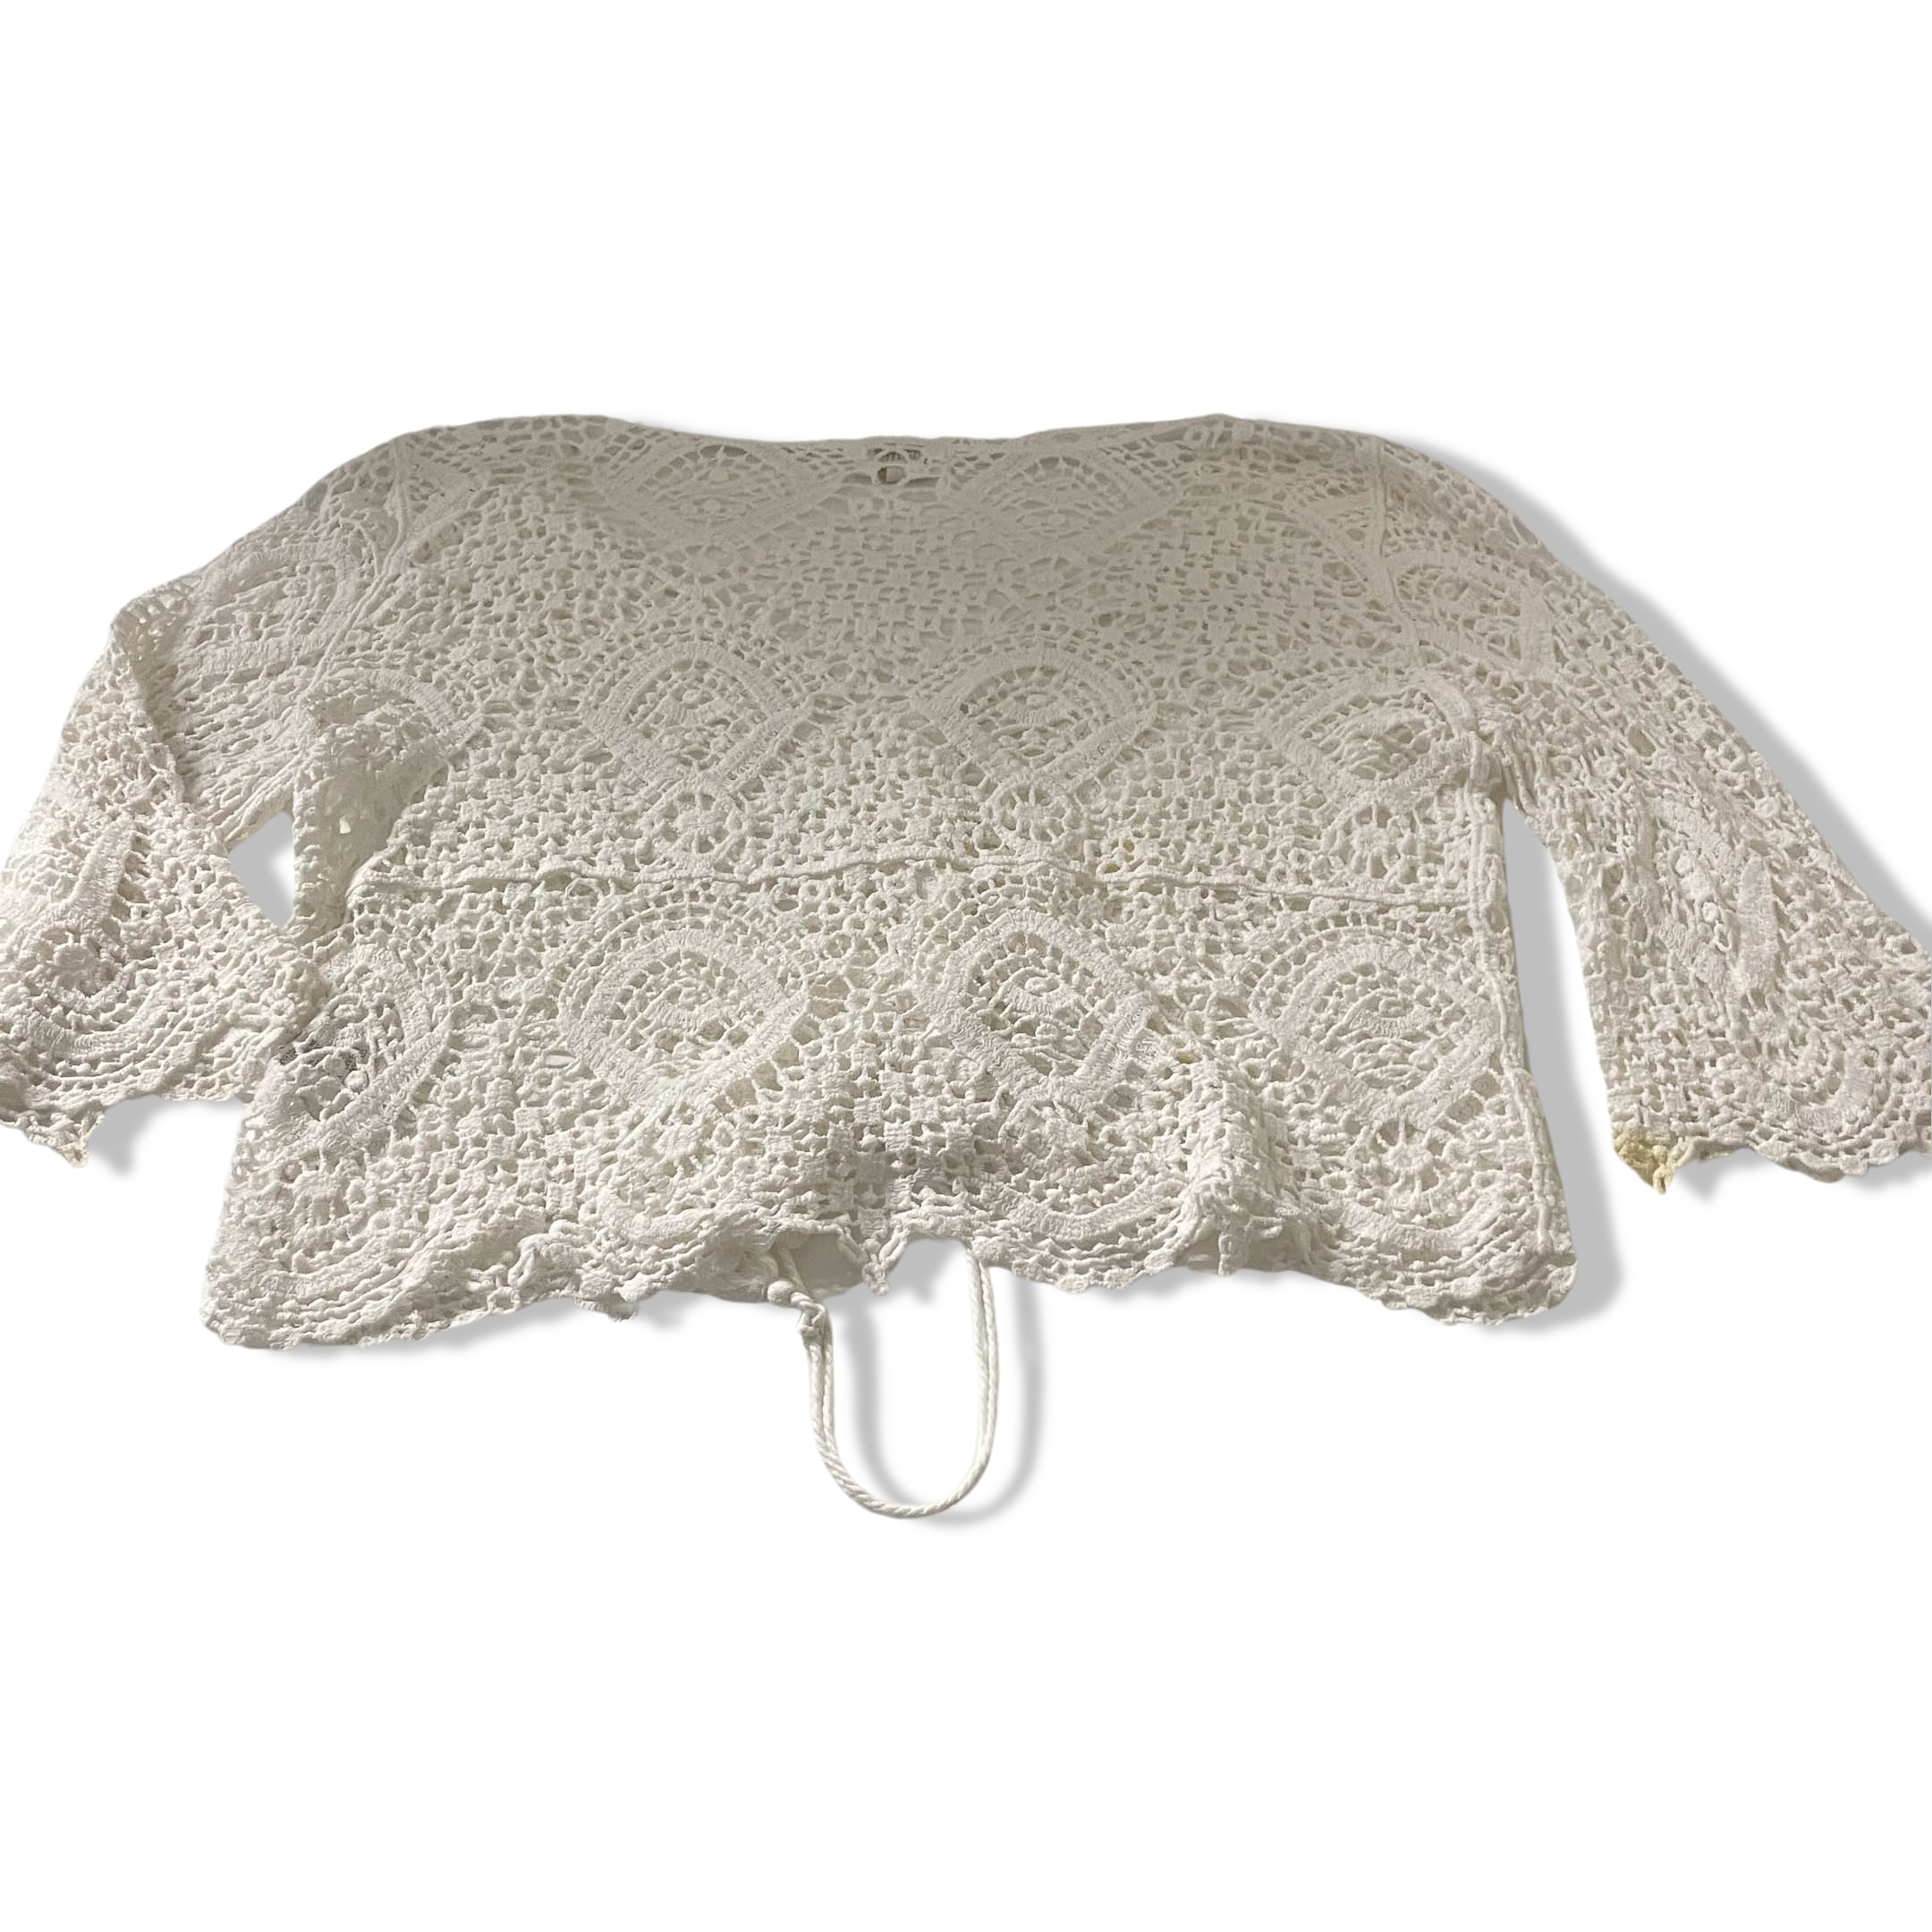 Vintage Stella Morgan womens crochet lace white large top